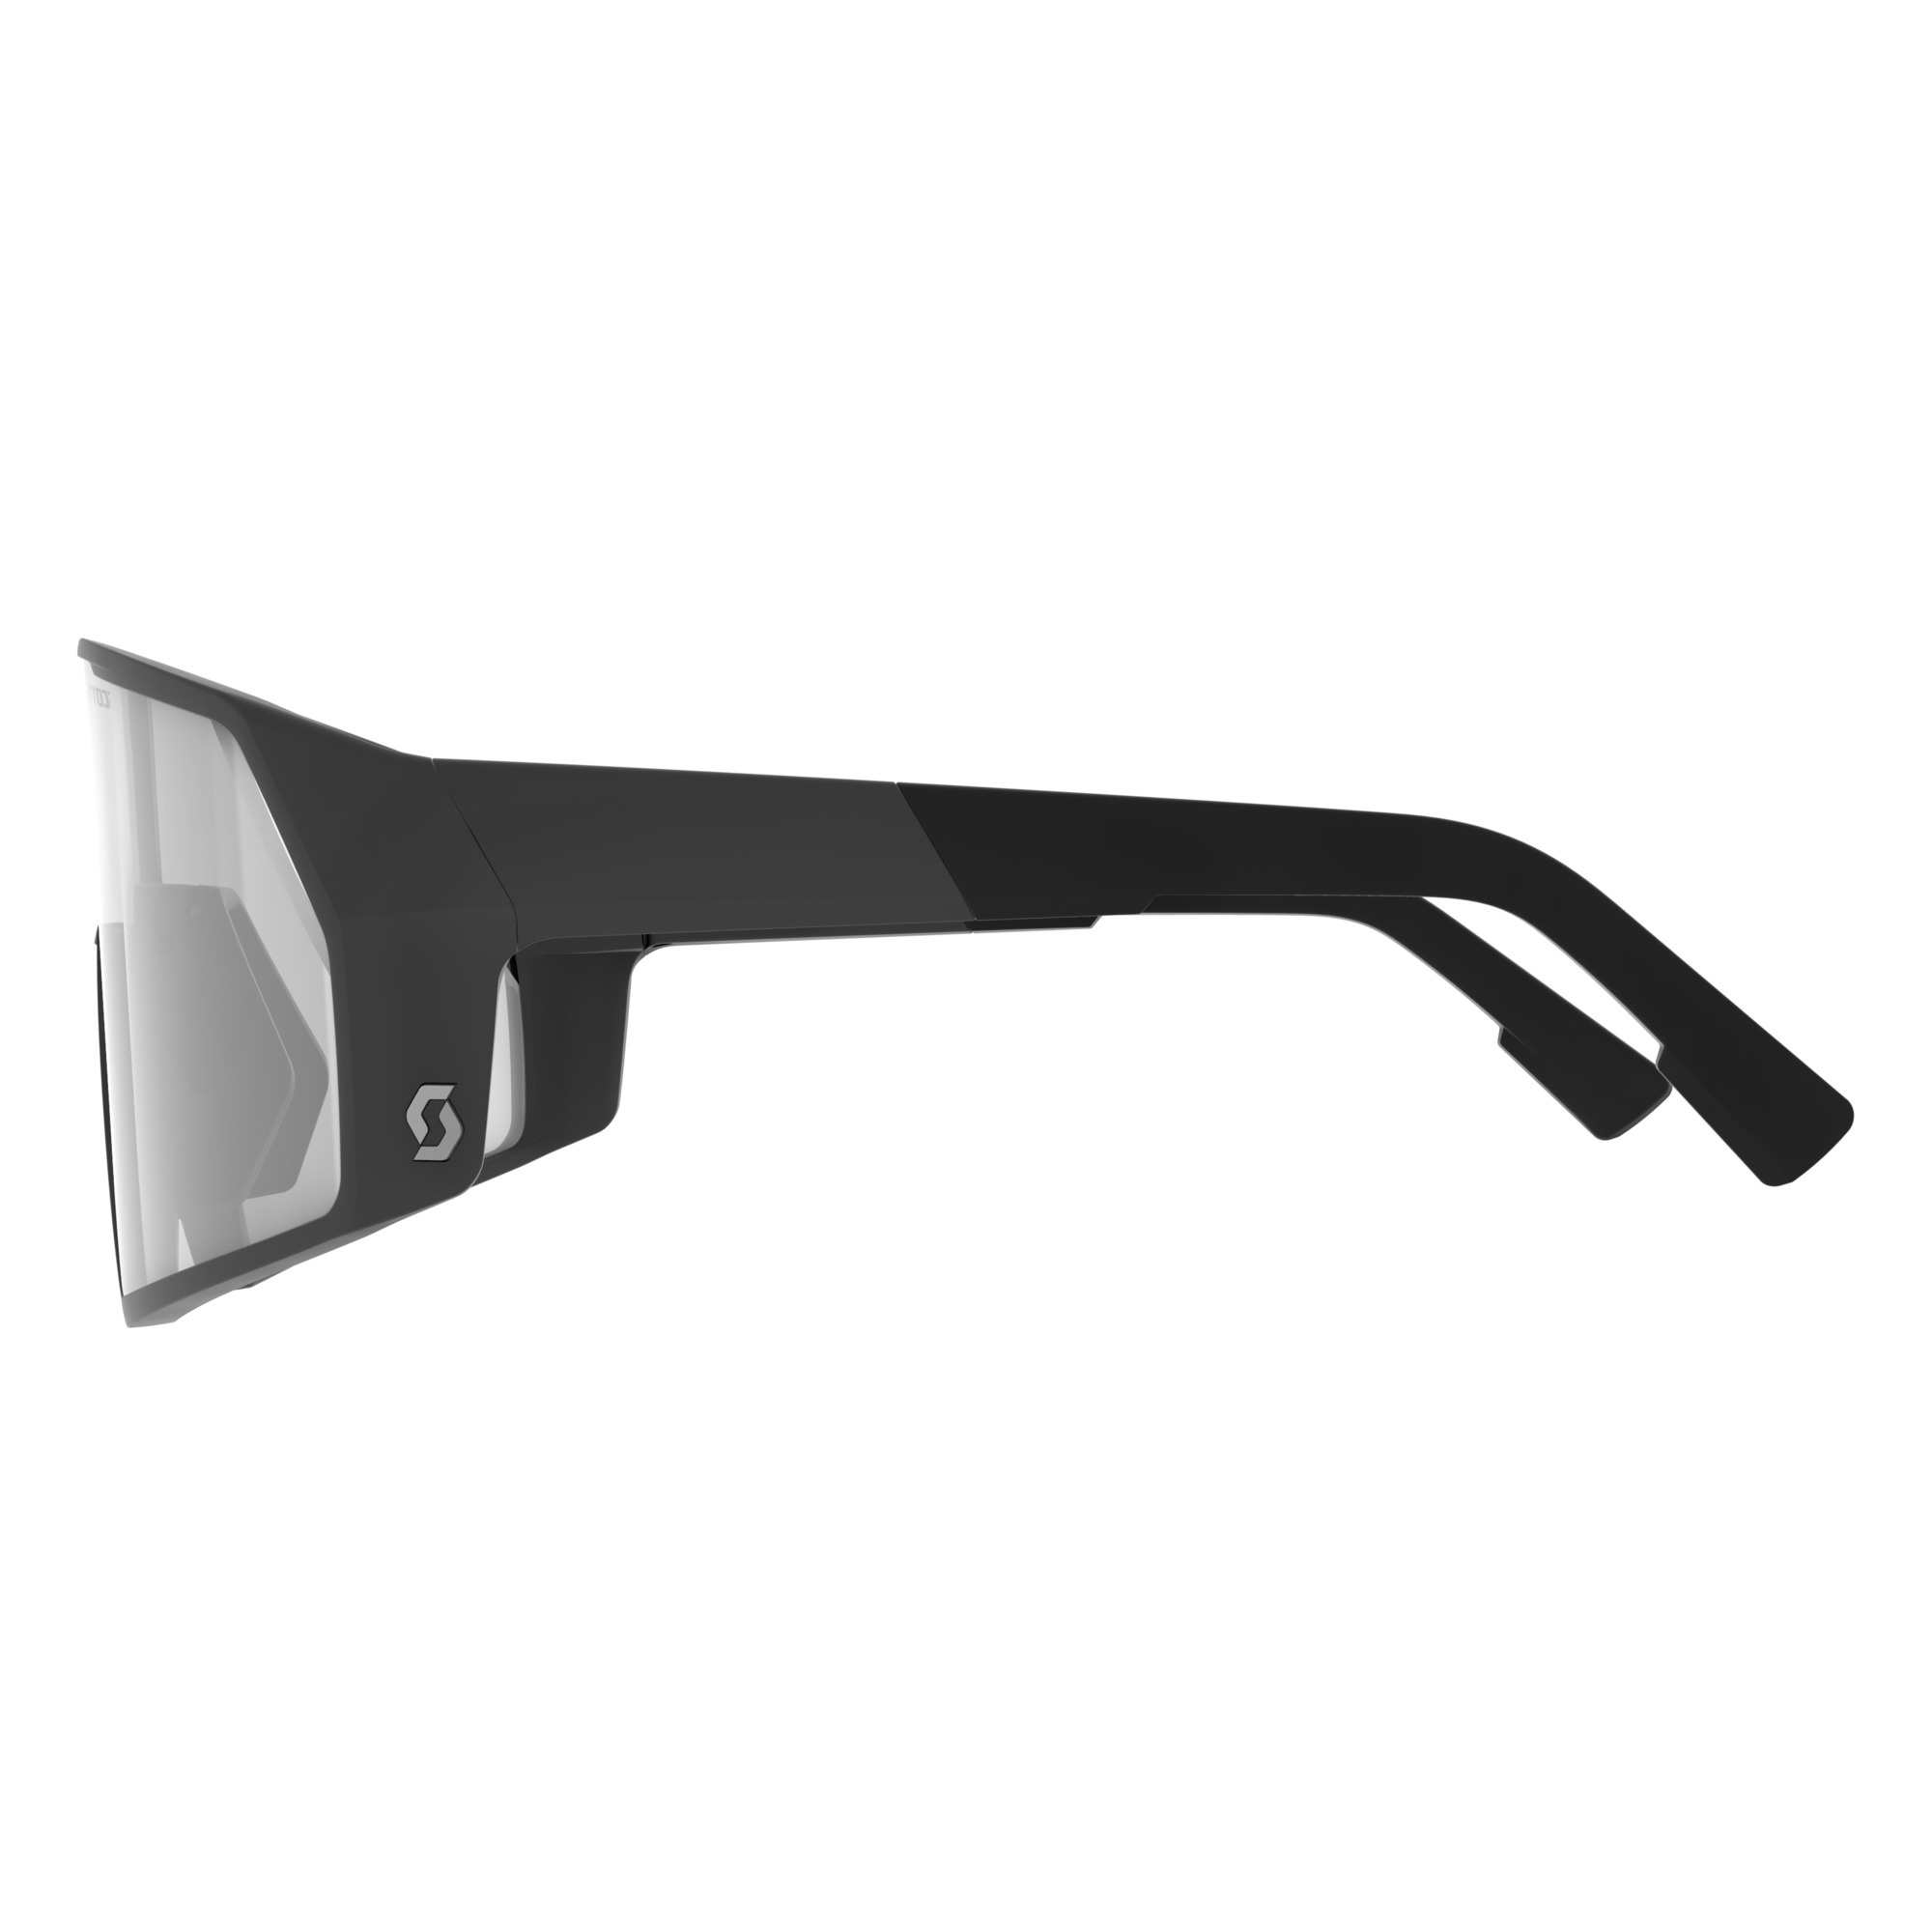 Beklædning - Cykelbriller - Scott Pro Shield Cykelbrille - Sort/Transparent